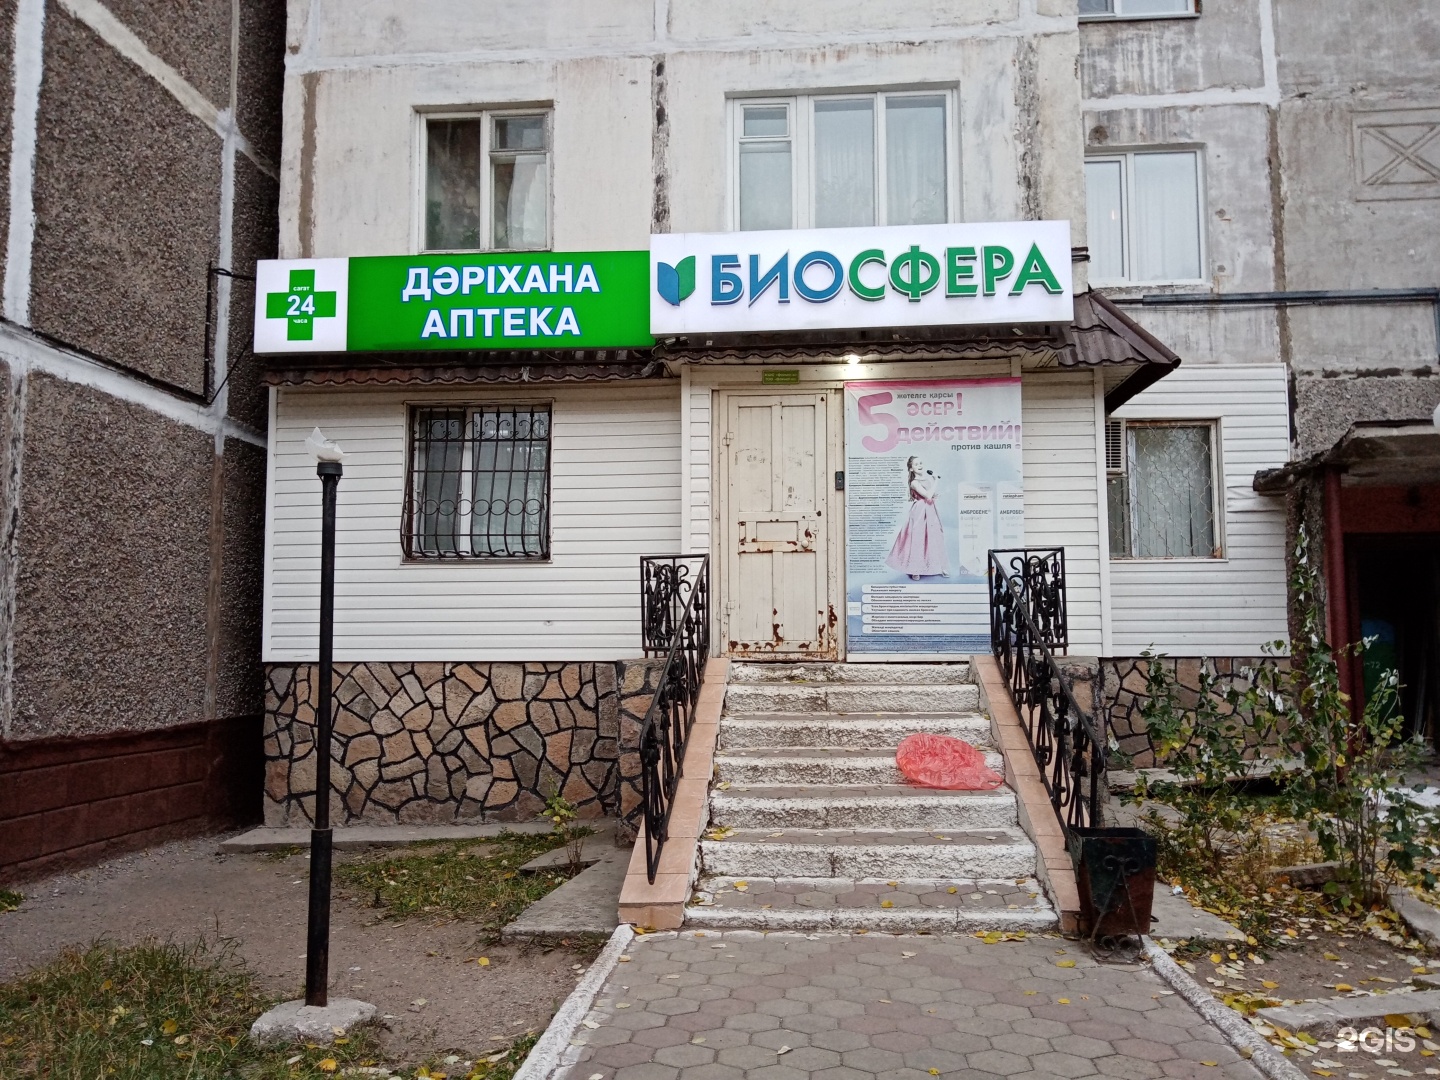 Семейная Аптека Темиртау